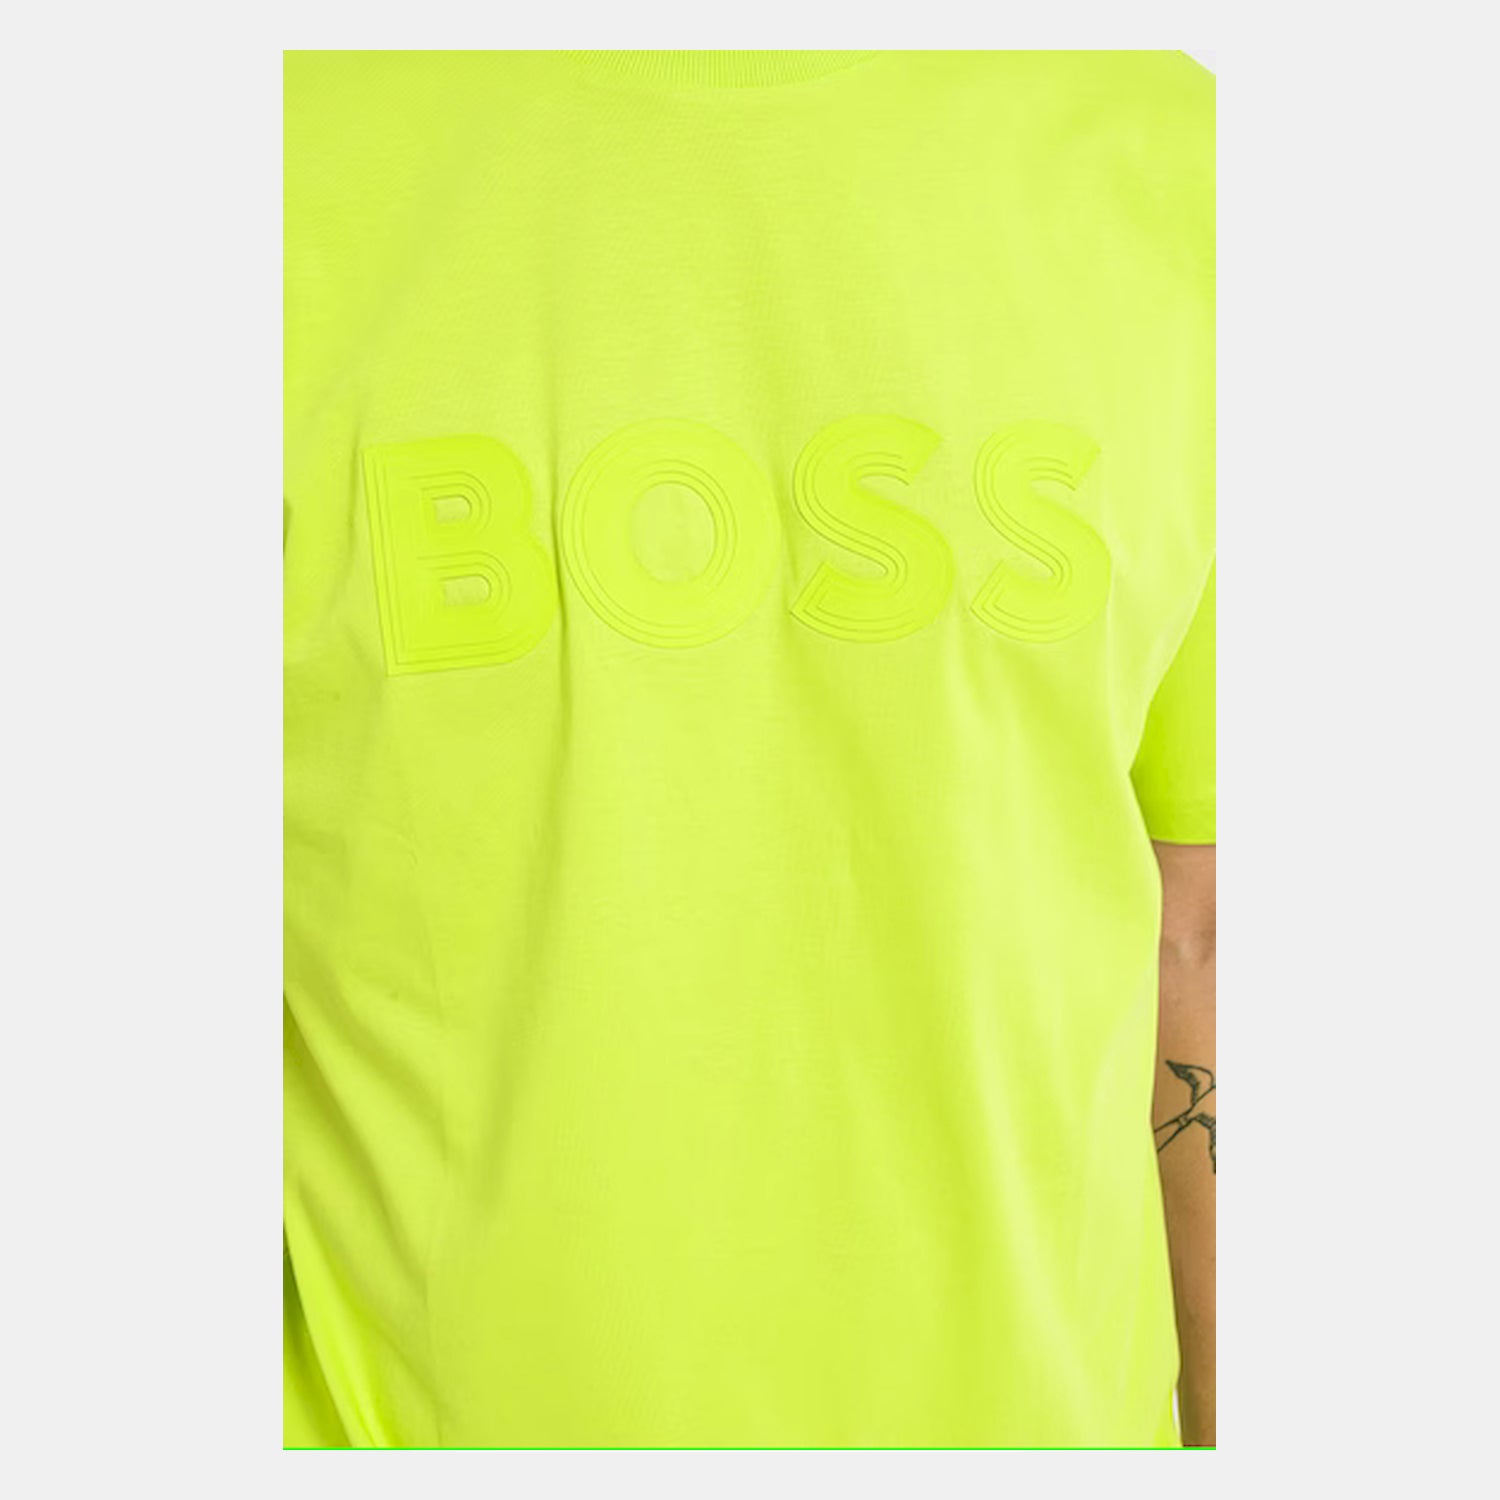 Boss T Shirt Tee Lotus 5050 Green Yell Verde Amarelo_shot3